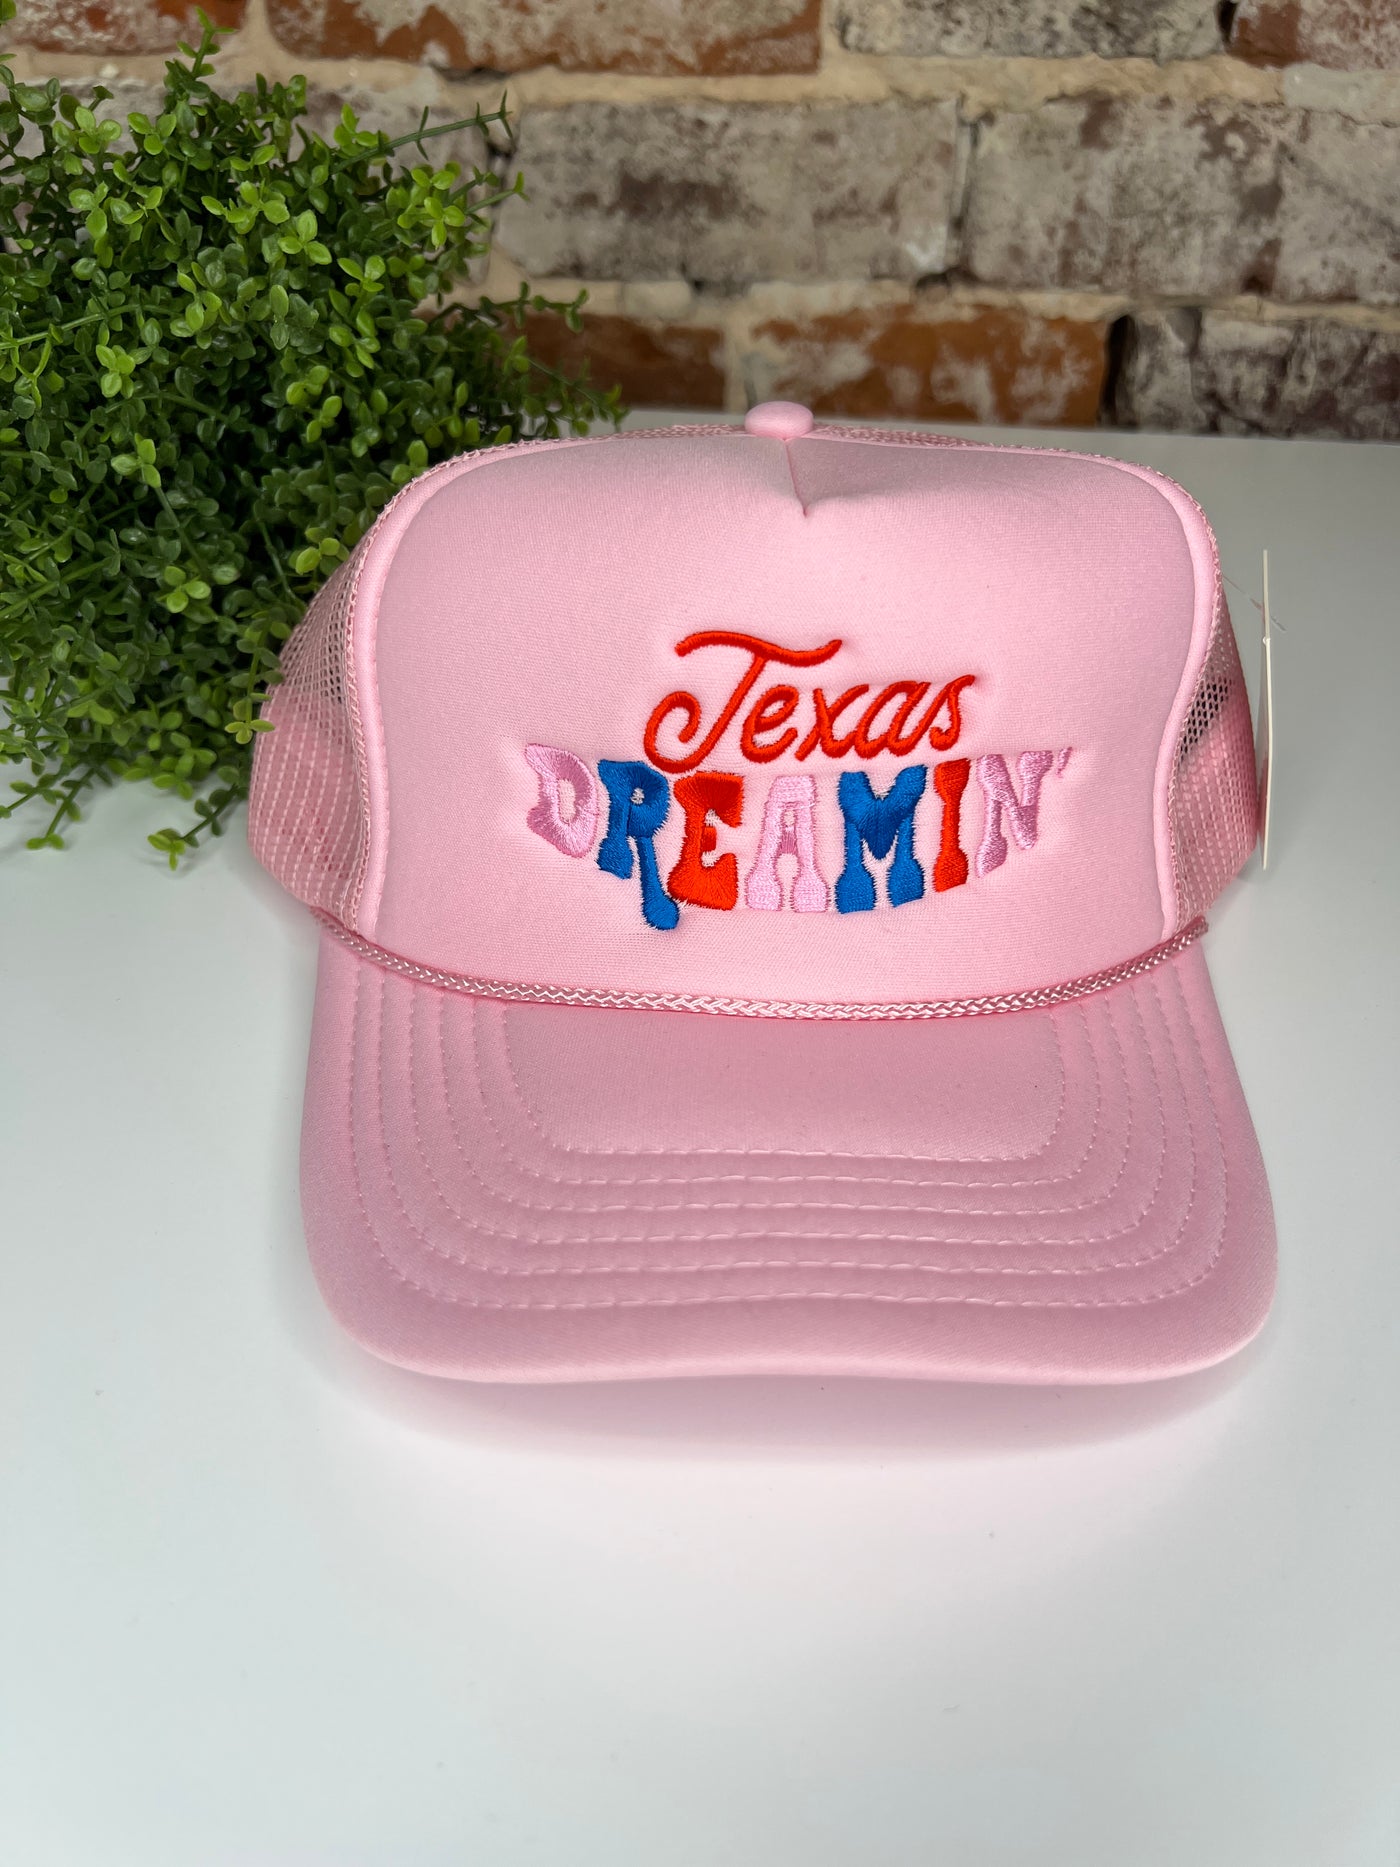 Texas Dreamin' Trucker Hat - Pink